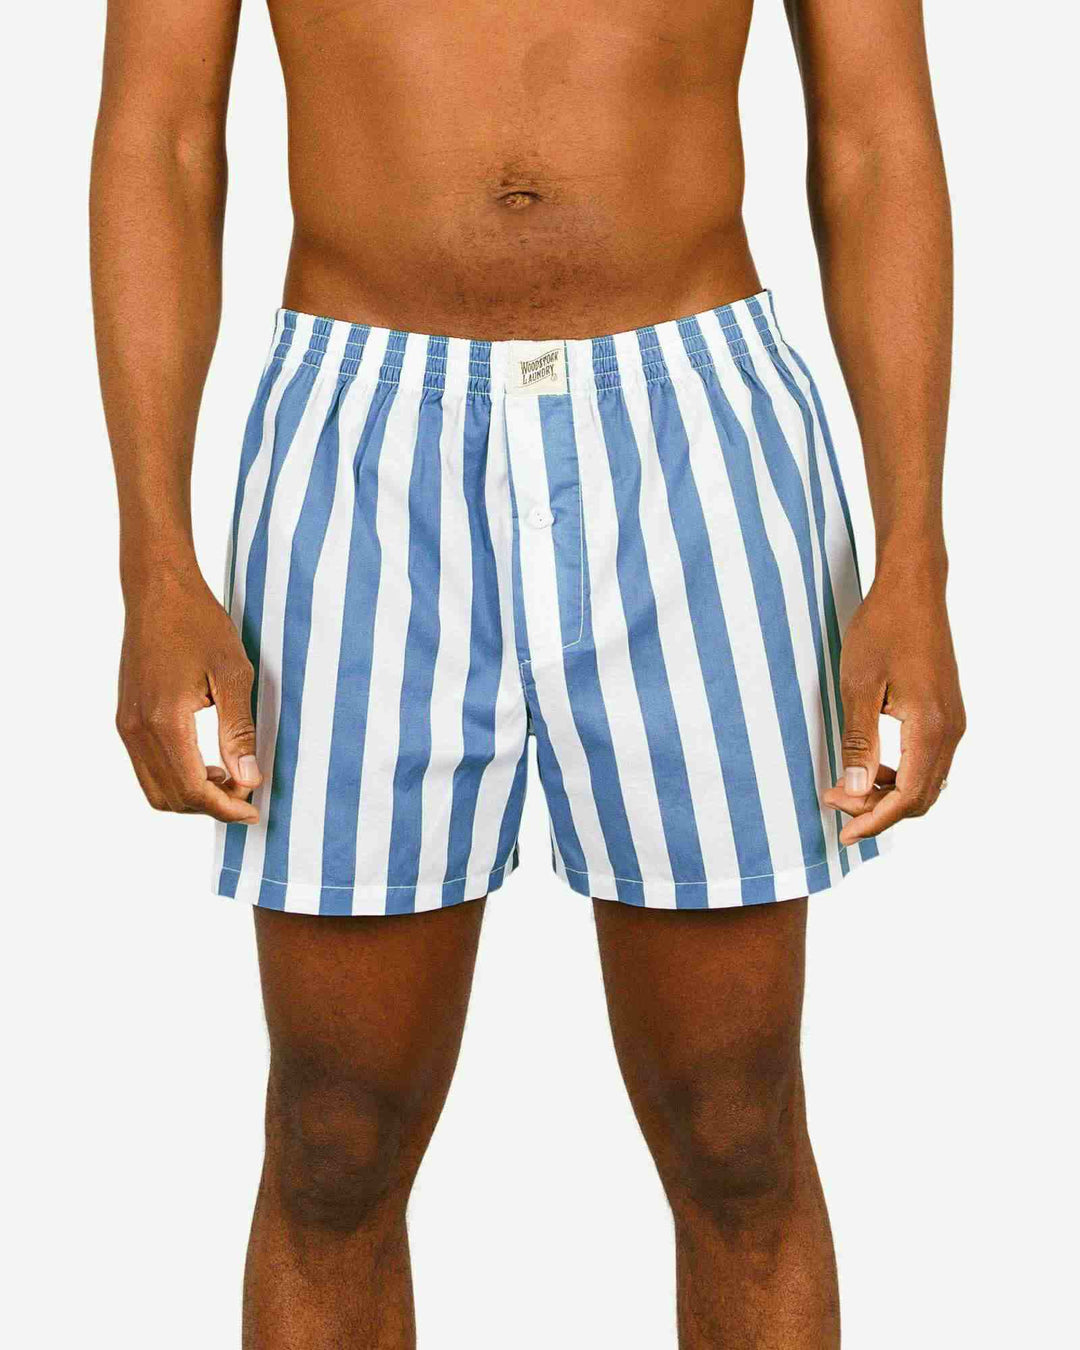 Mens boxer shorts - Blue white beach stripe